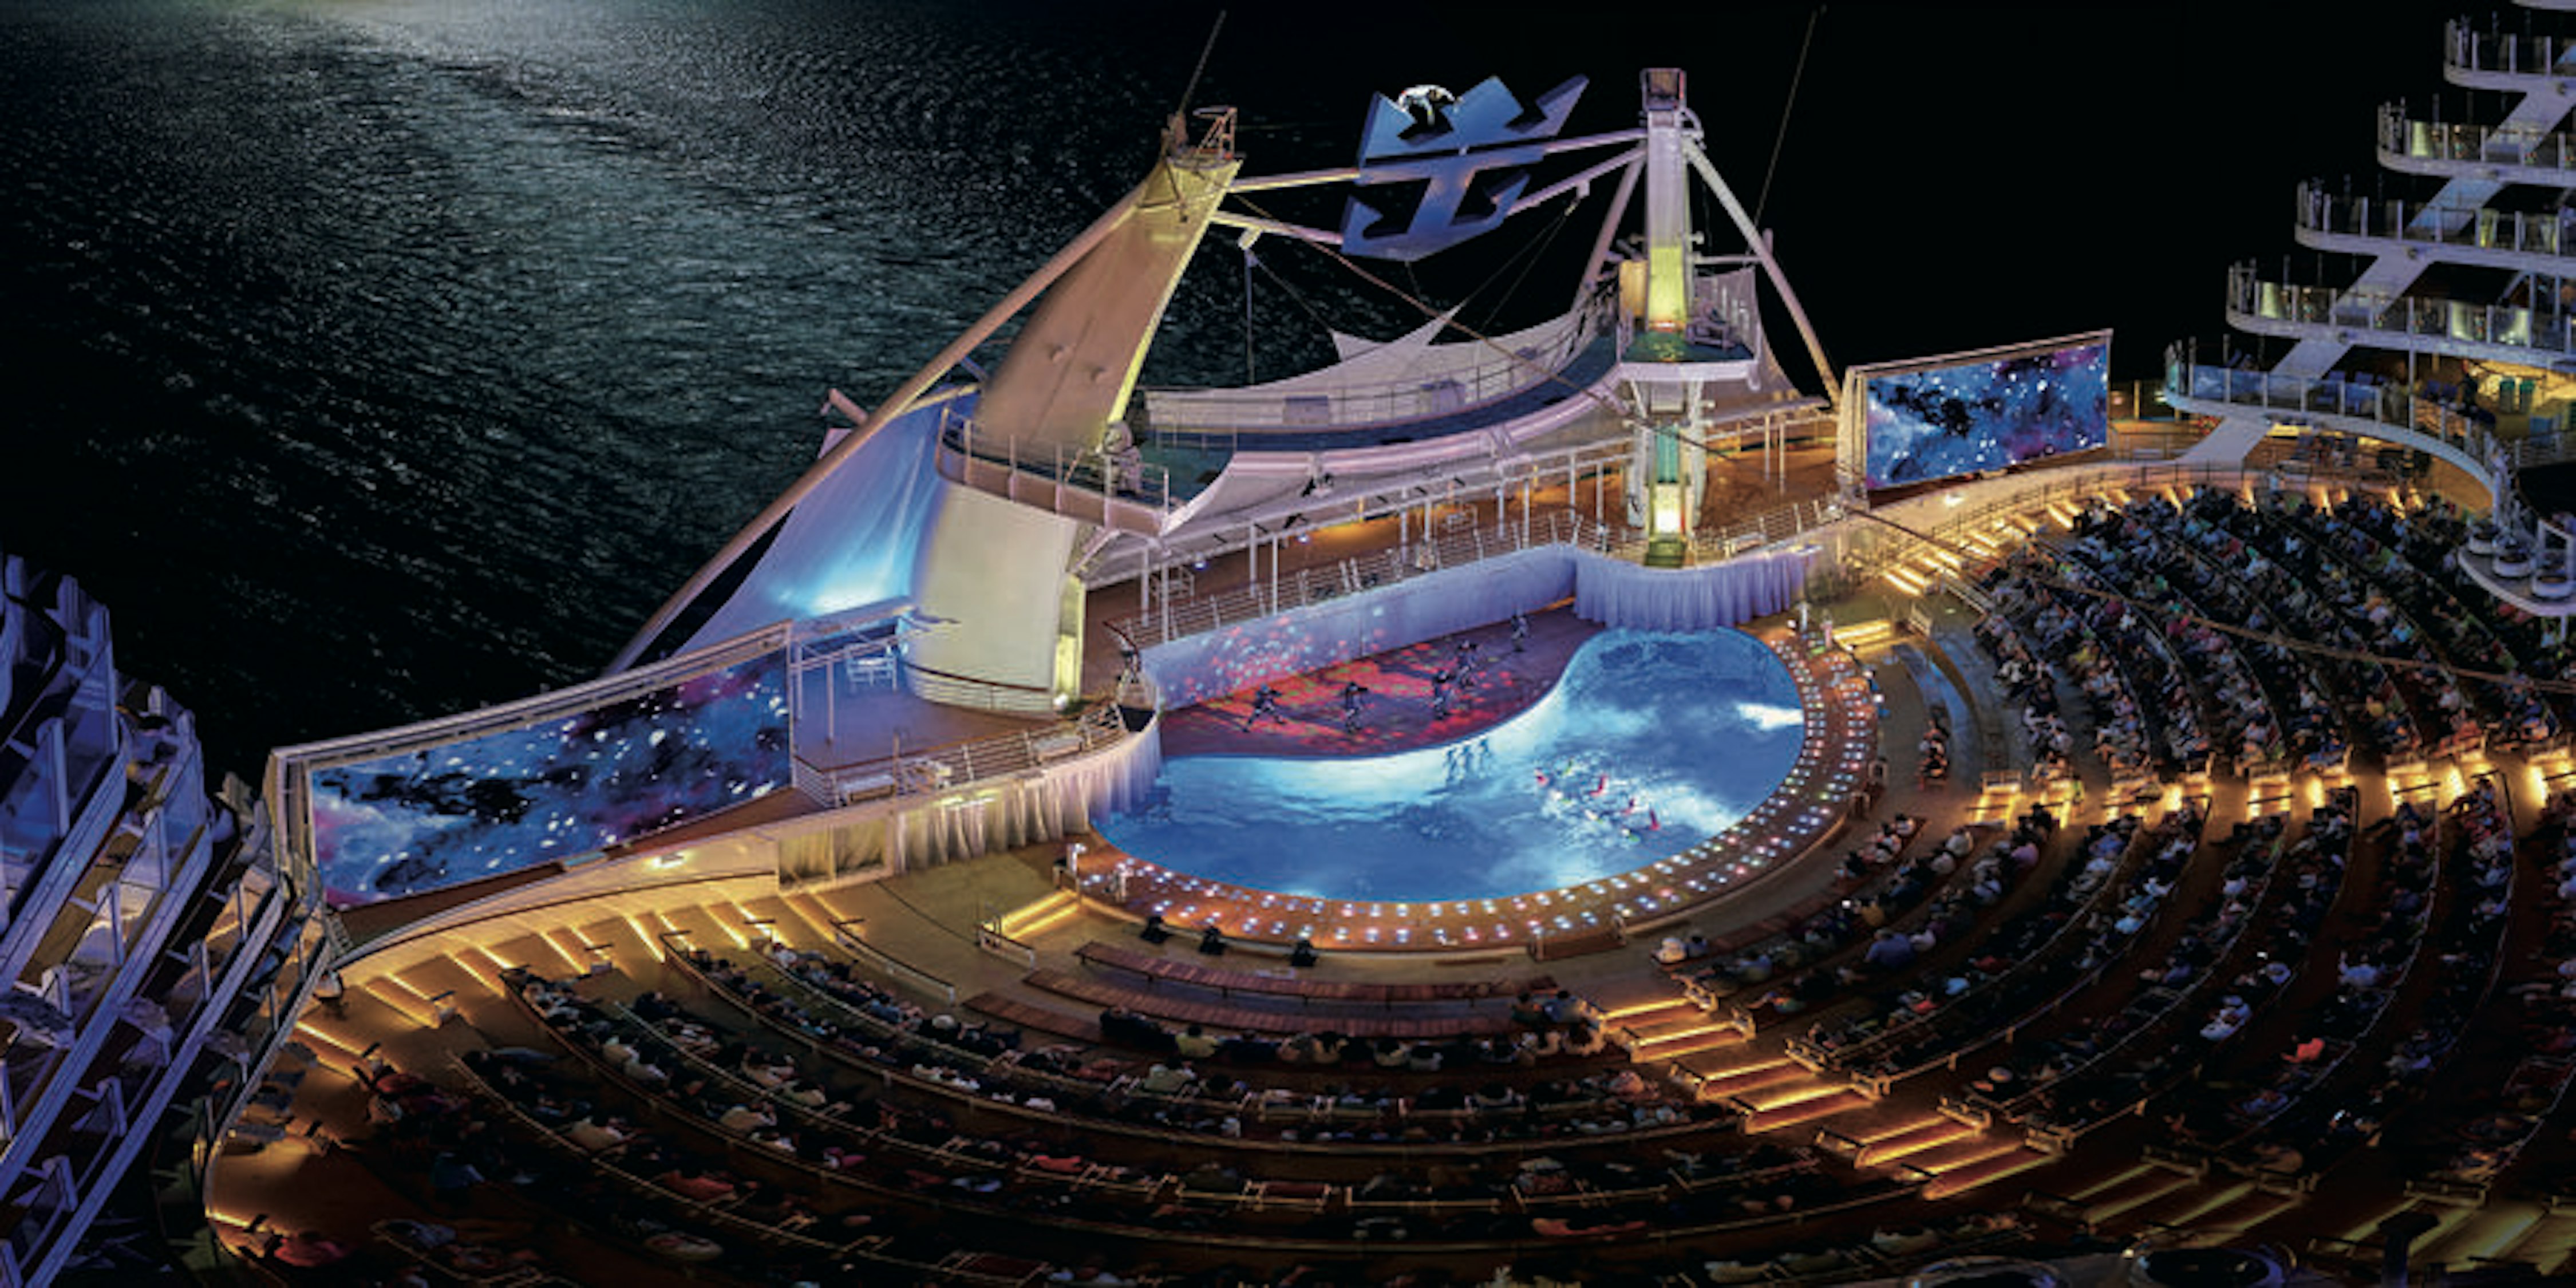 royal caribbean international's oasis class cruise ship